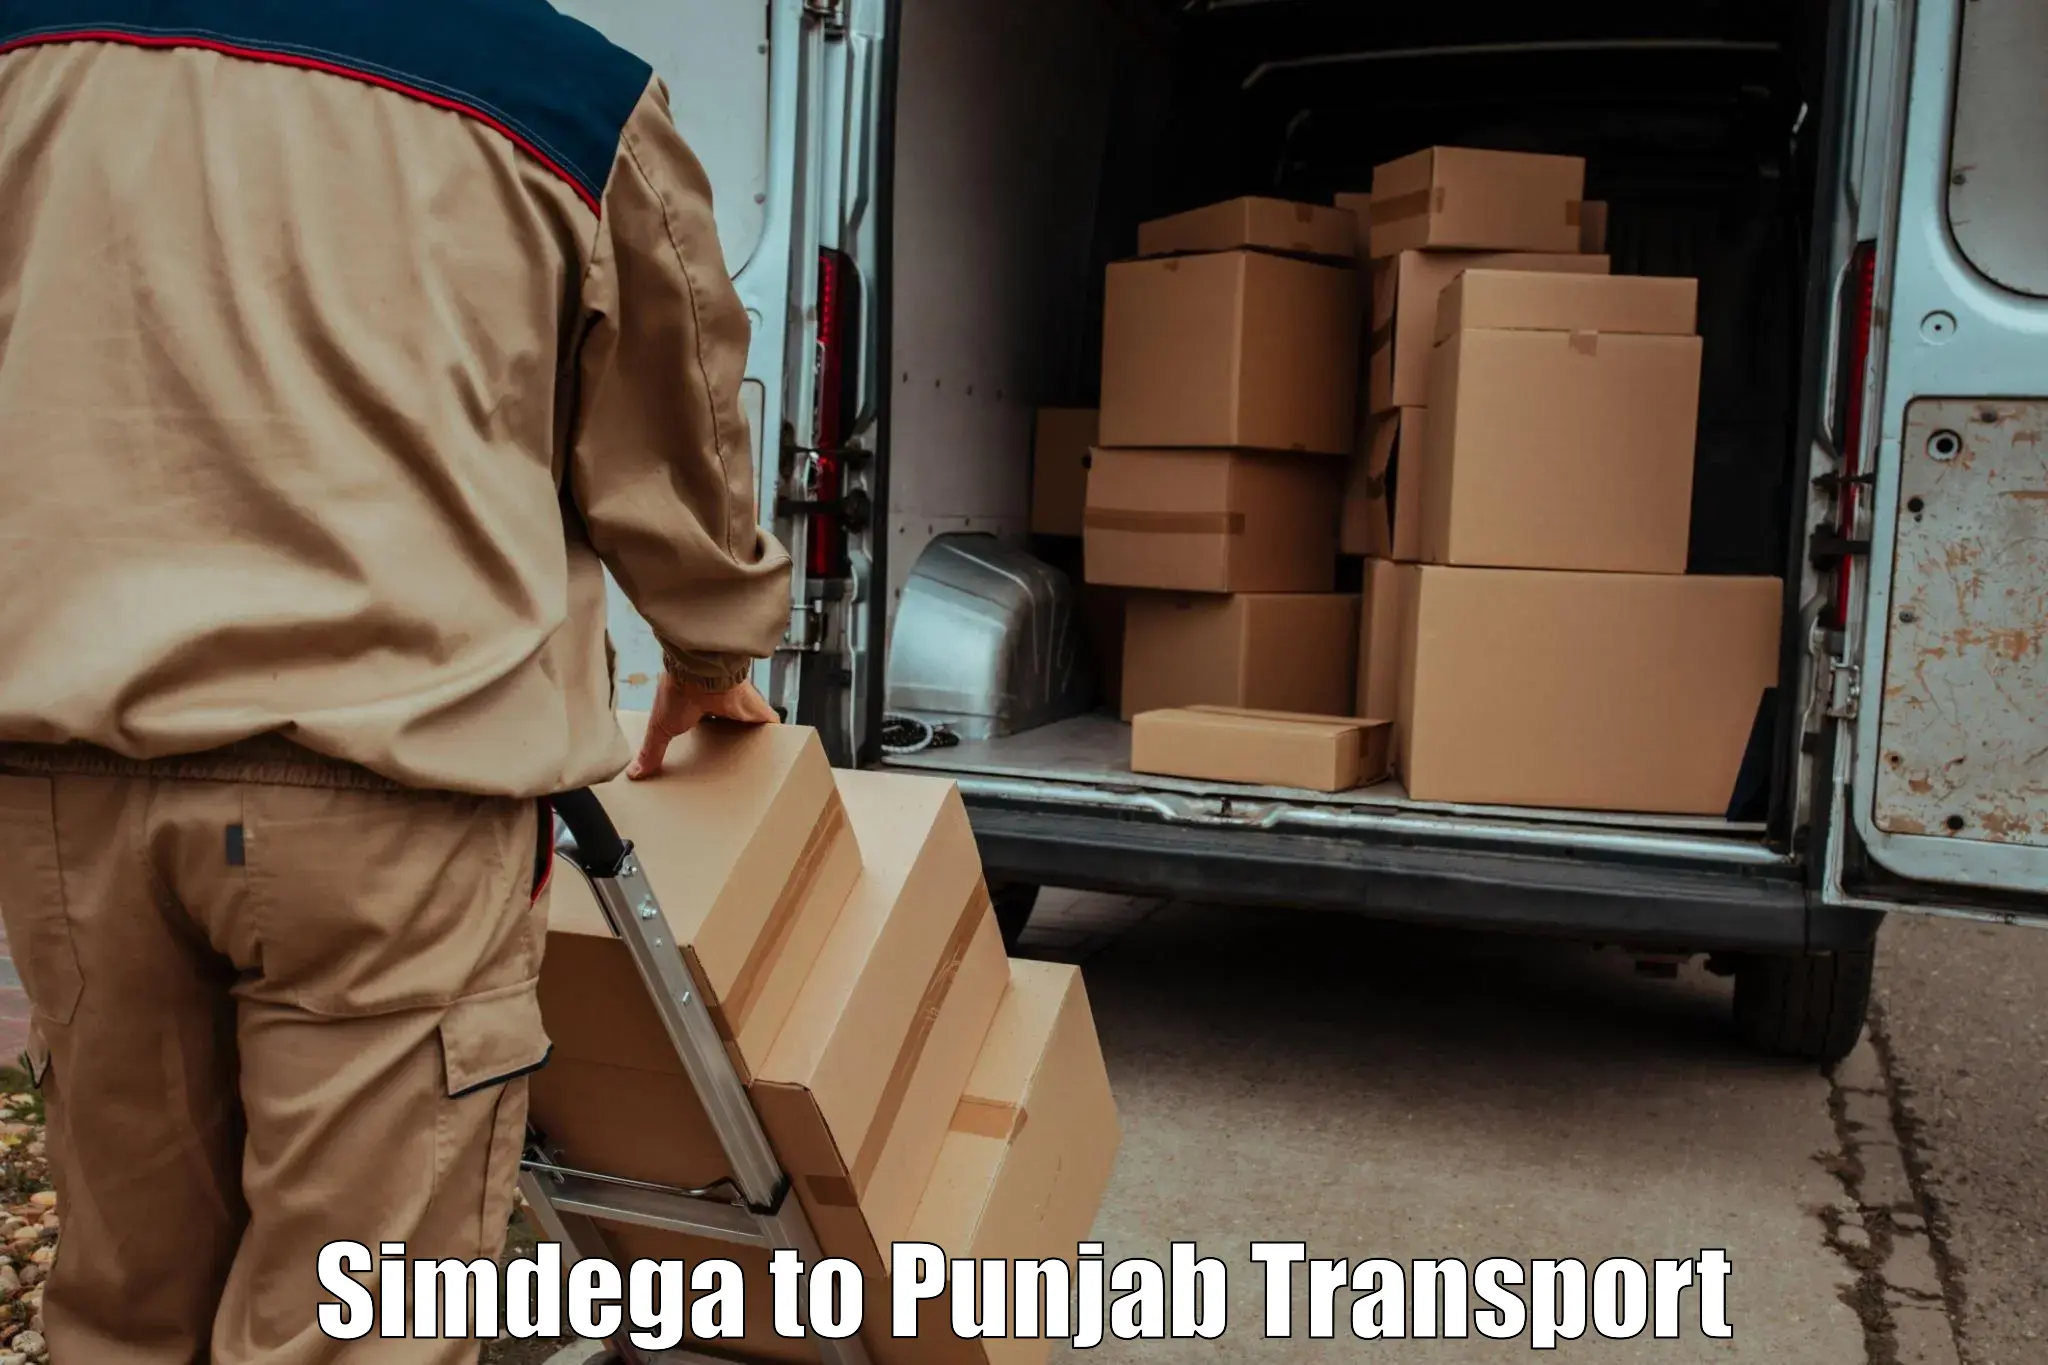 Delivery service Simdega to Punjab